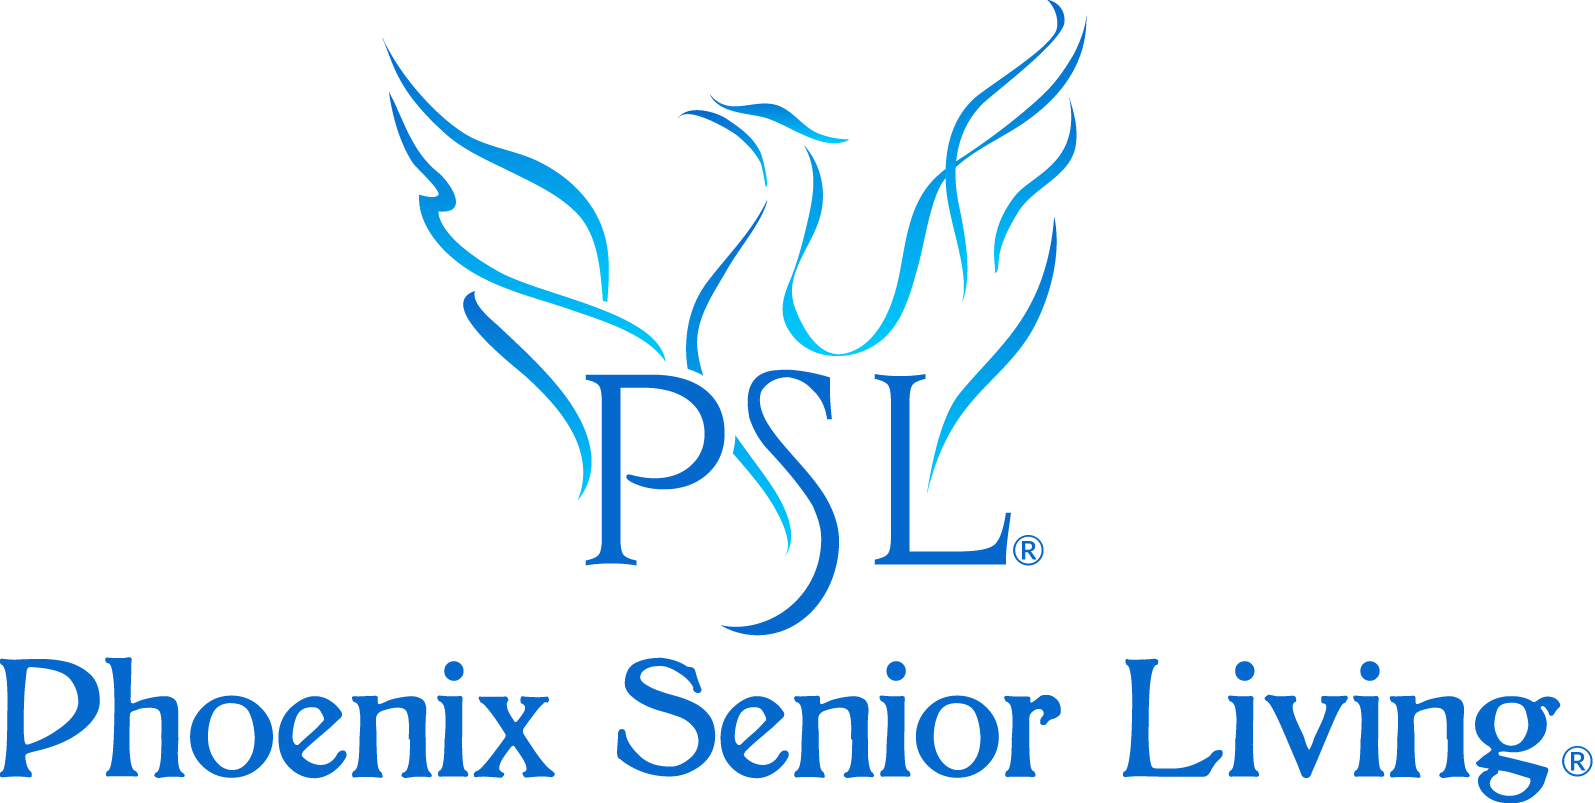 Phoenix Senior Living logo